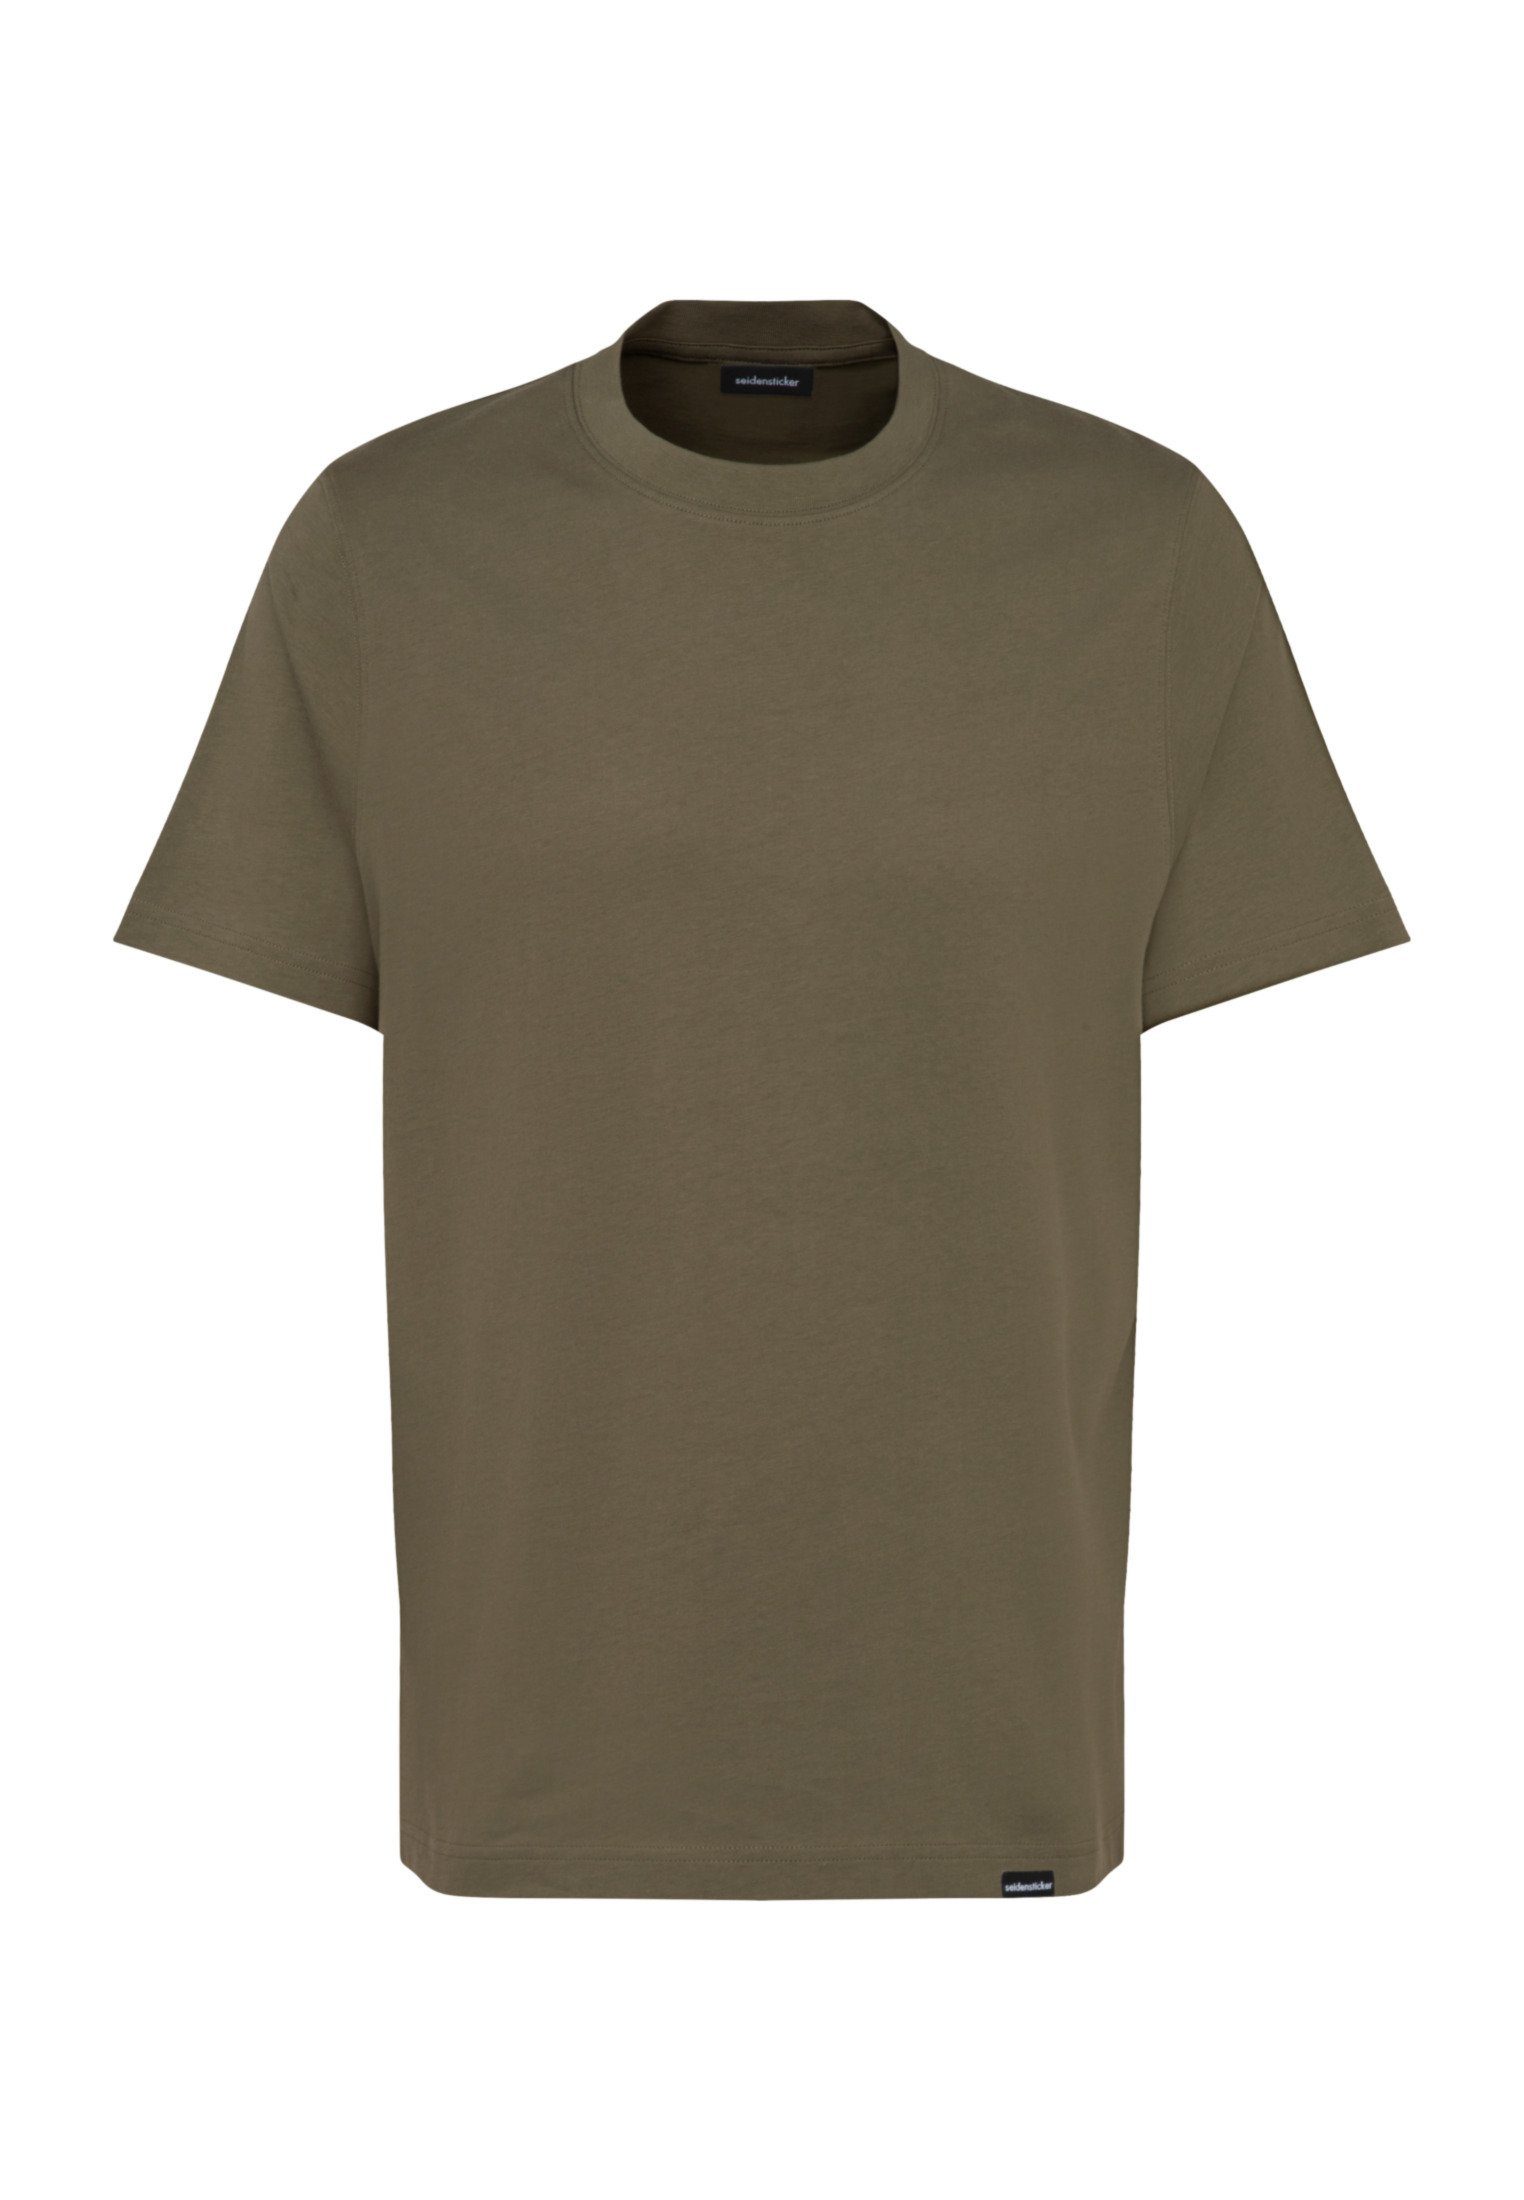 Rundhals Kurzarm Uni T-Shirt seidensticker Regular Grün